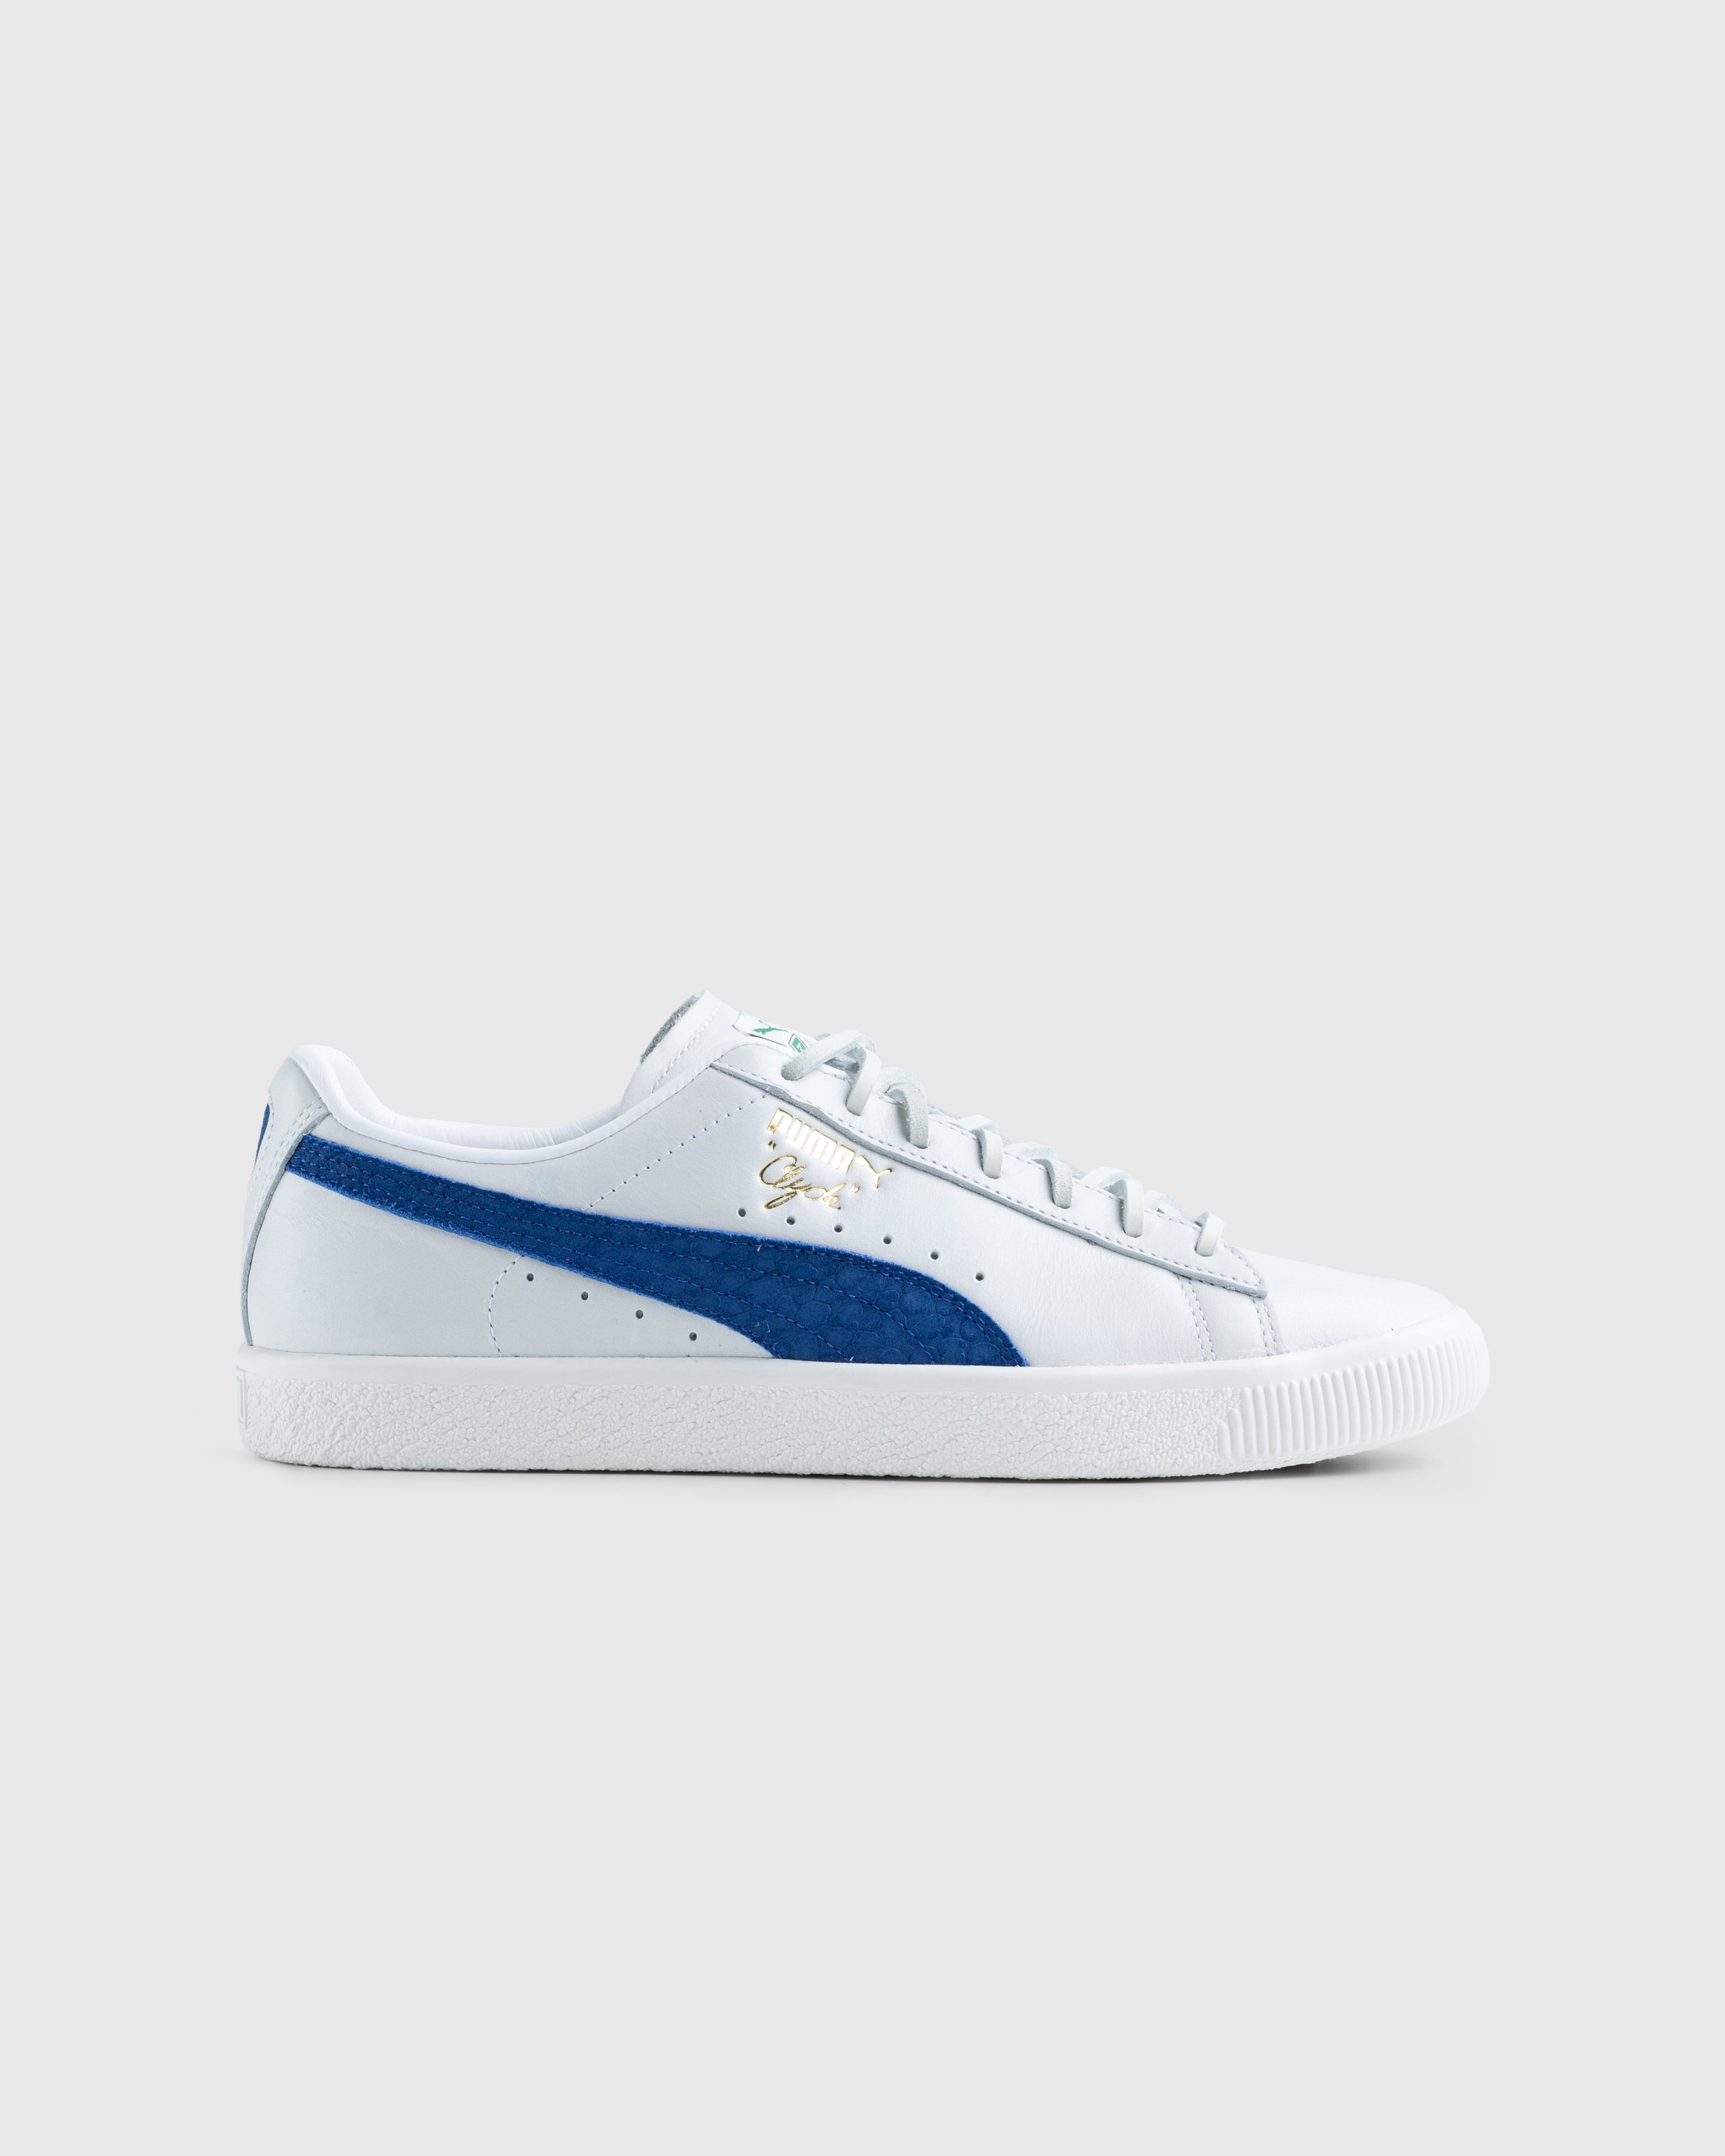 Puma - Clyde Soho (NYC) - Footwear - White - Image 1